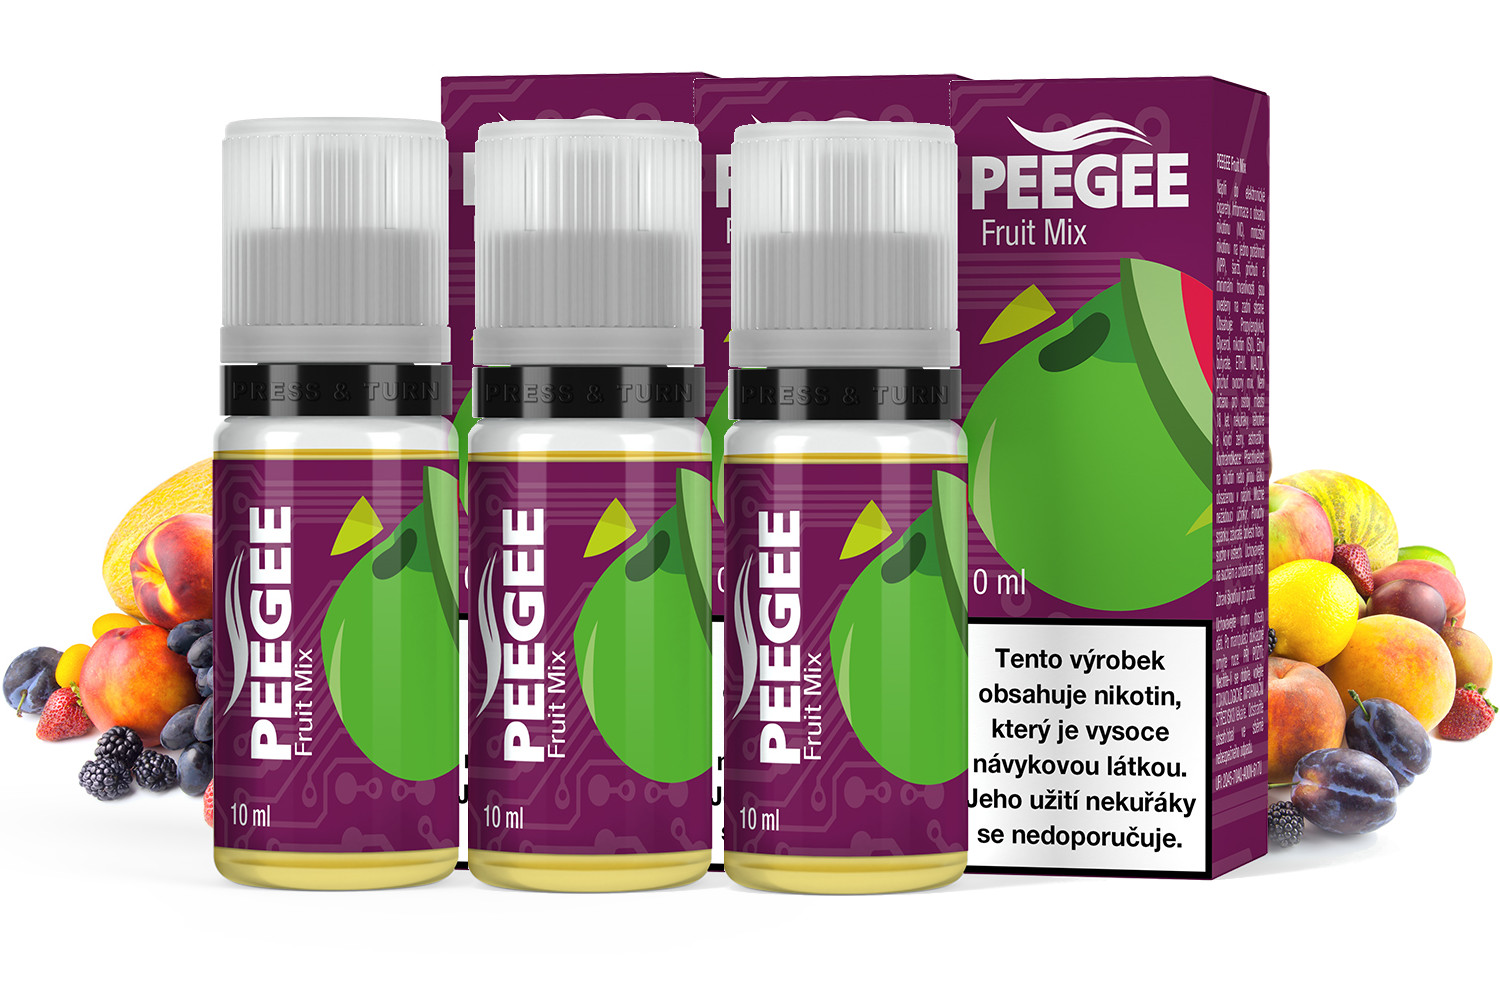 PEEGEE - Ovocná směs (Fruit Mix) 3x10ml Obsah nikotinu: 18mg